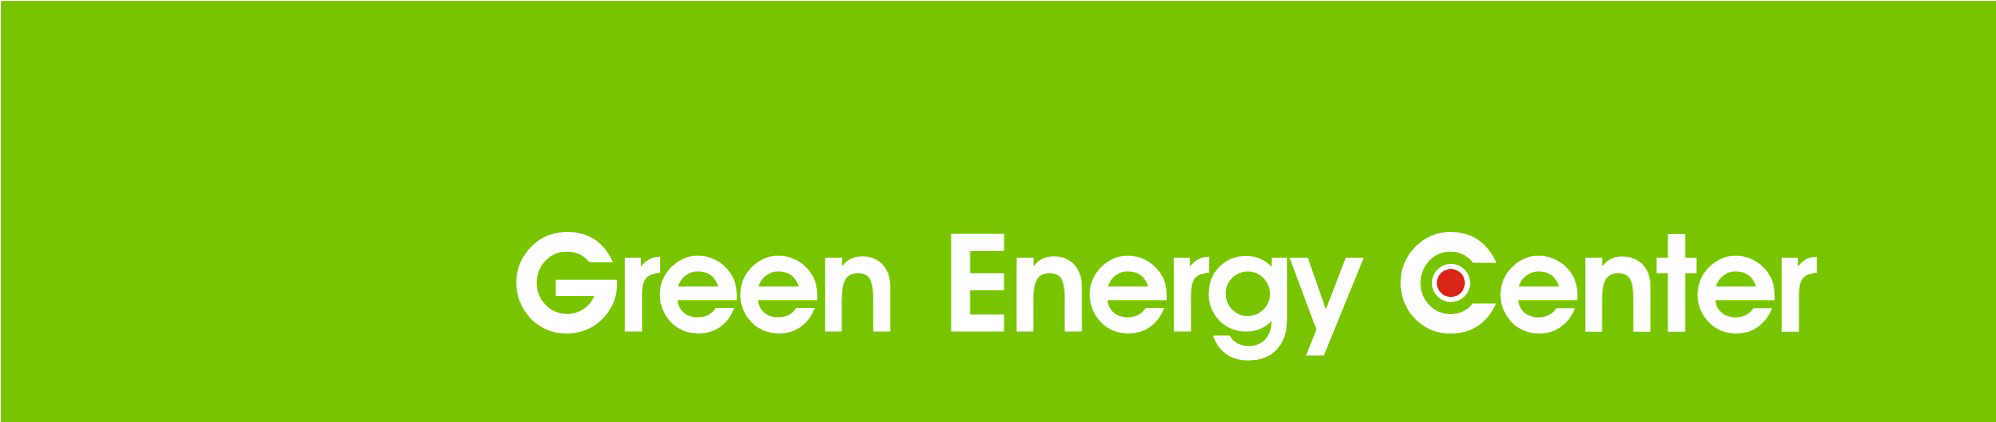 Green Energy Center Europe GmbH